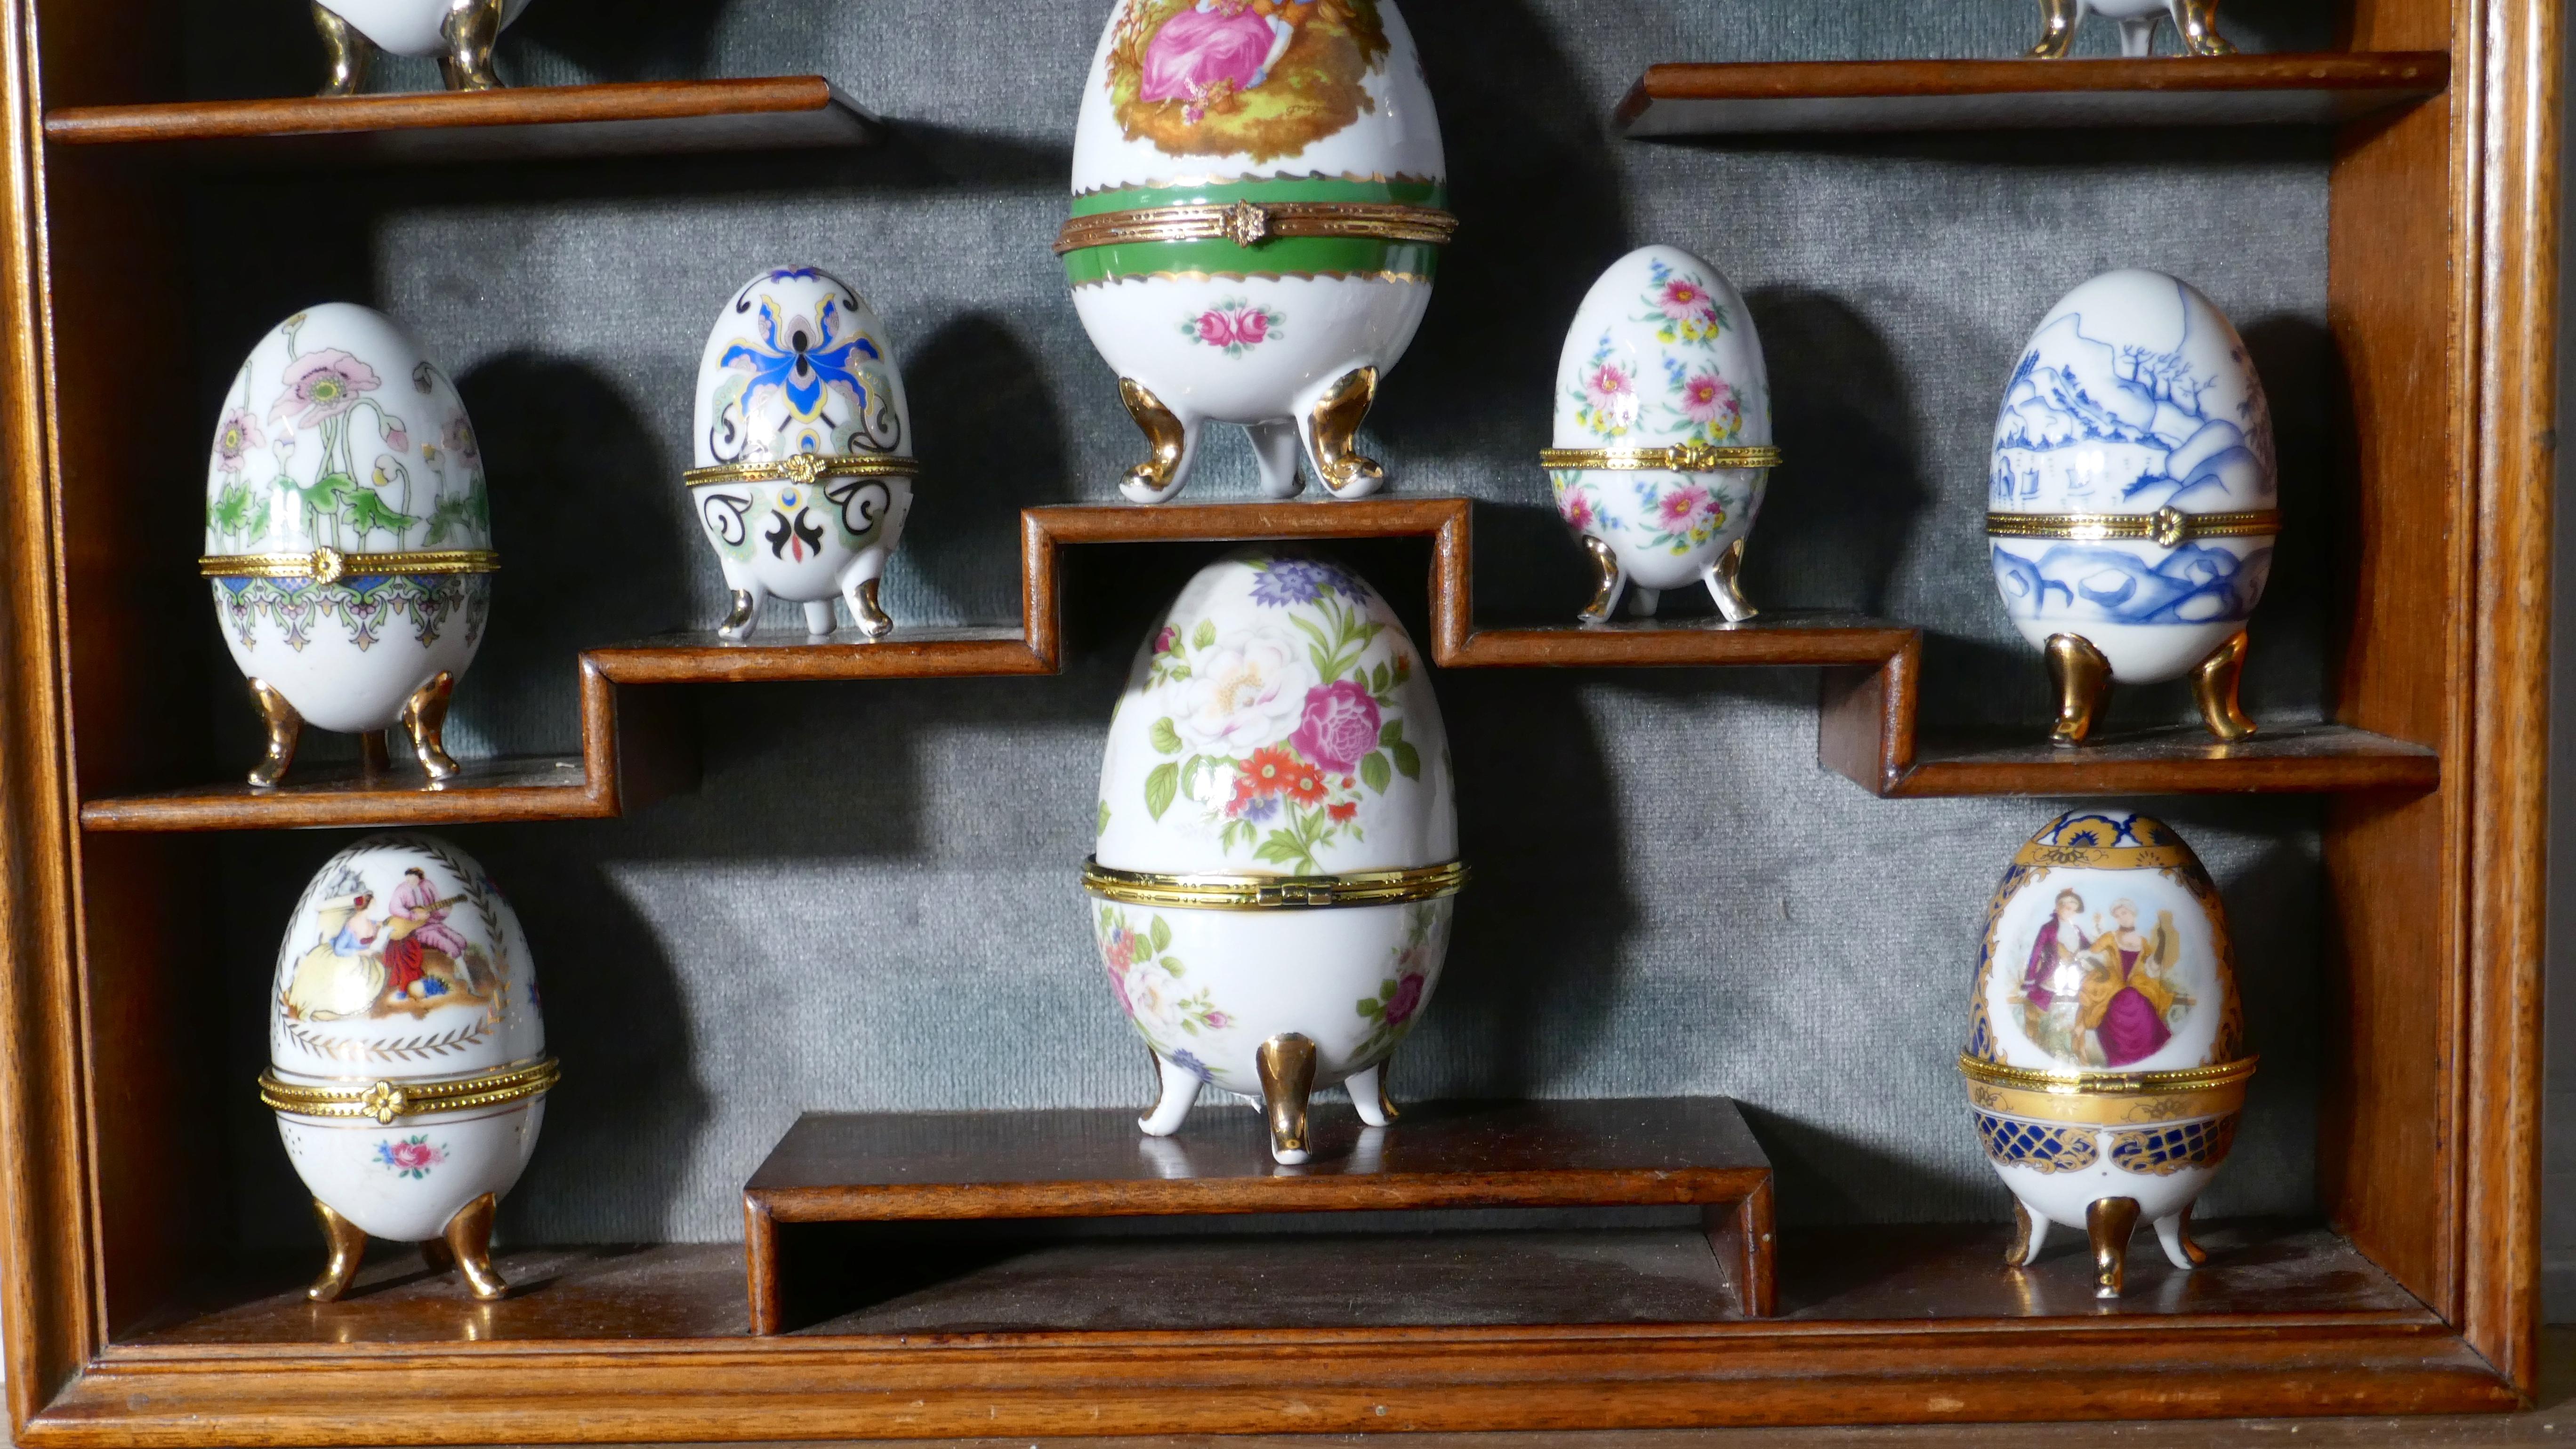 20th Century Collection of Ceramic Egg Trinket Boxes, in Original Art Deco Display Shelf